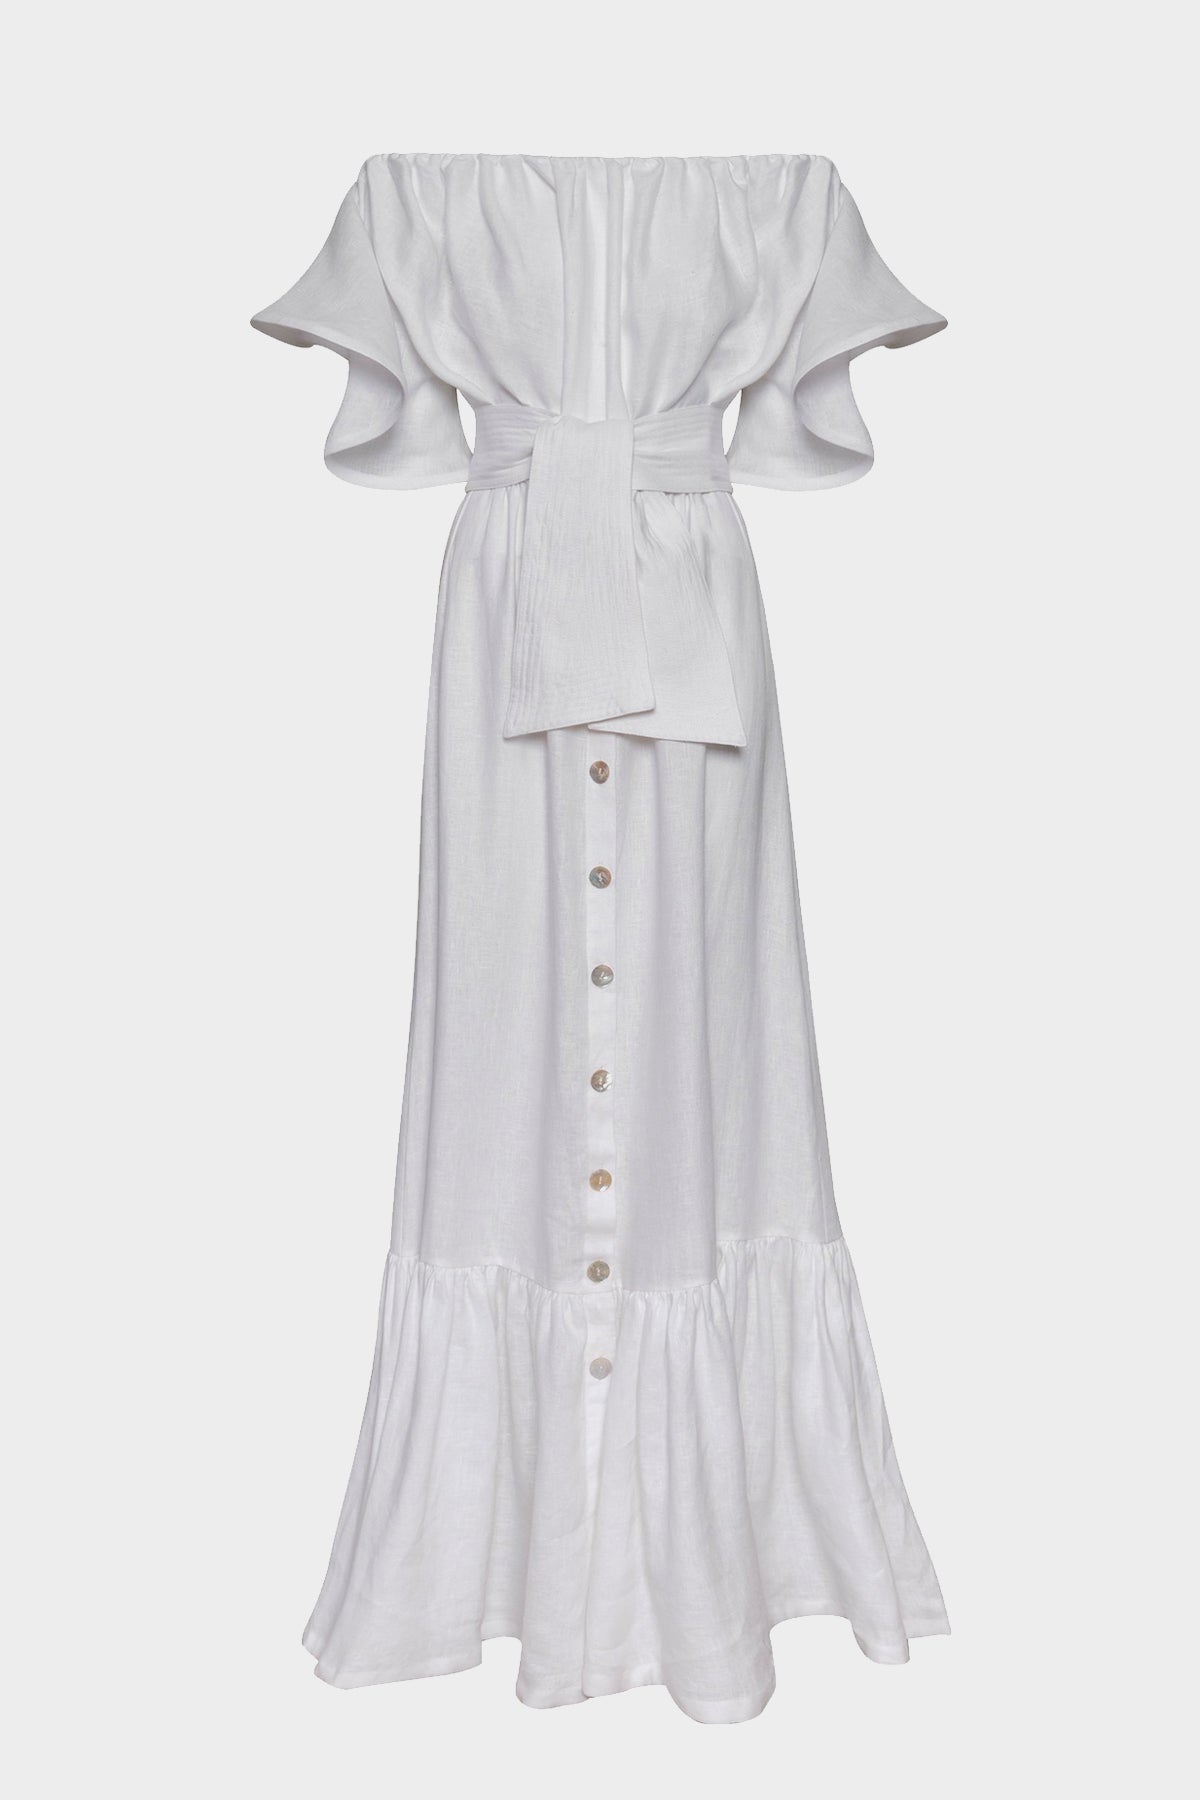 Capurgana Linen Maxi Dress in White - shop-olivia.com